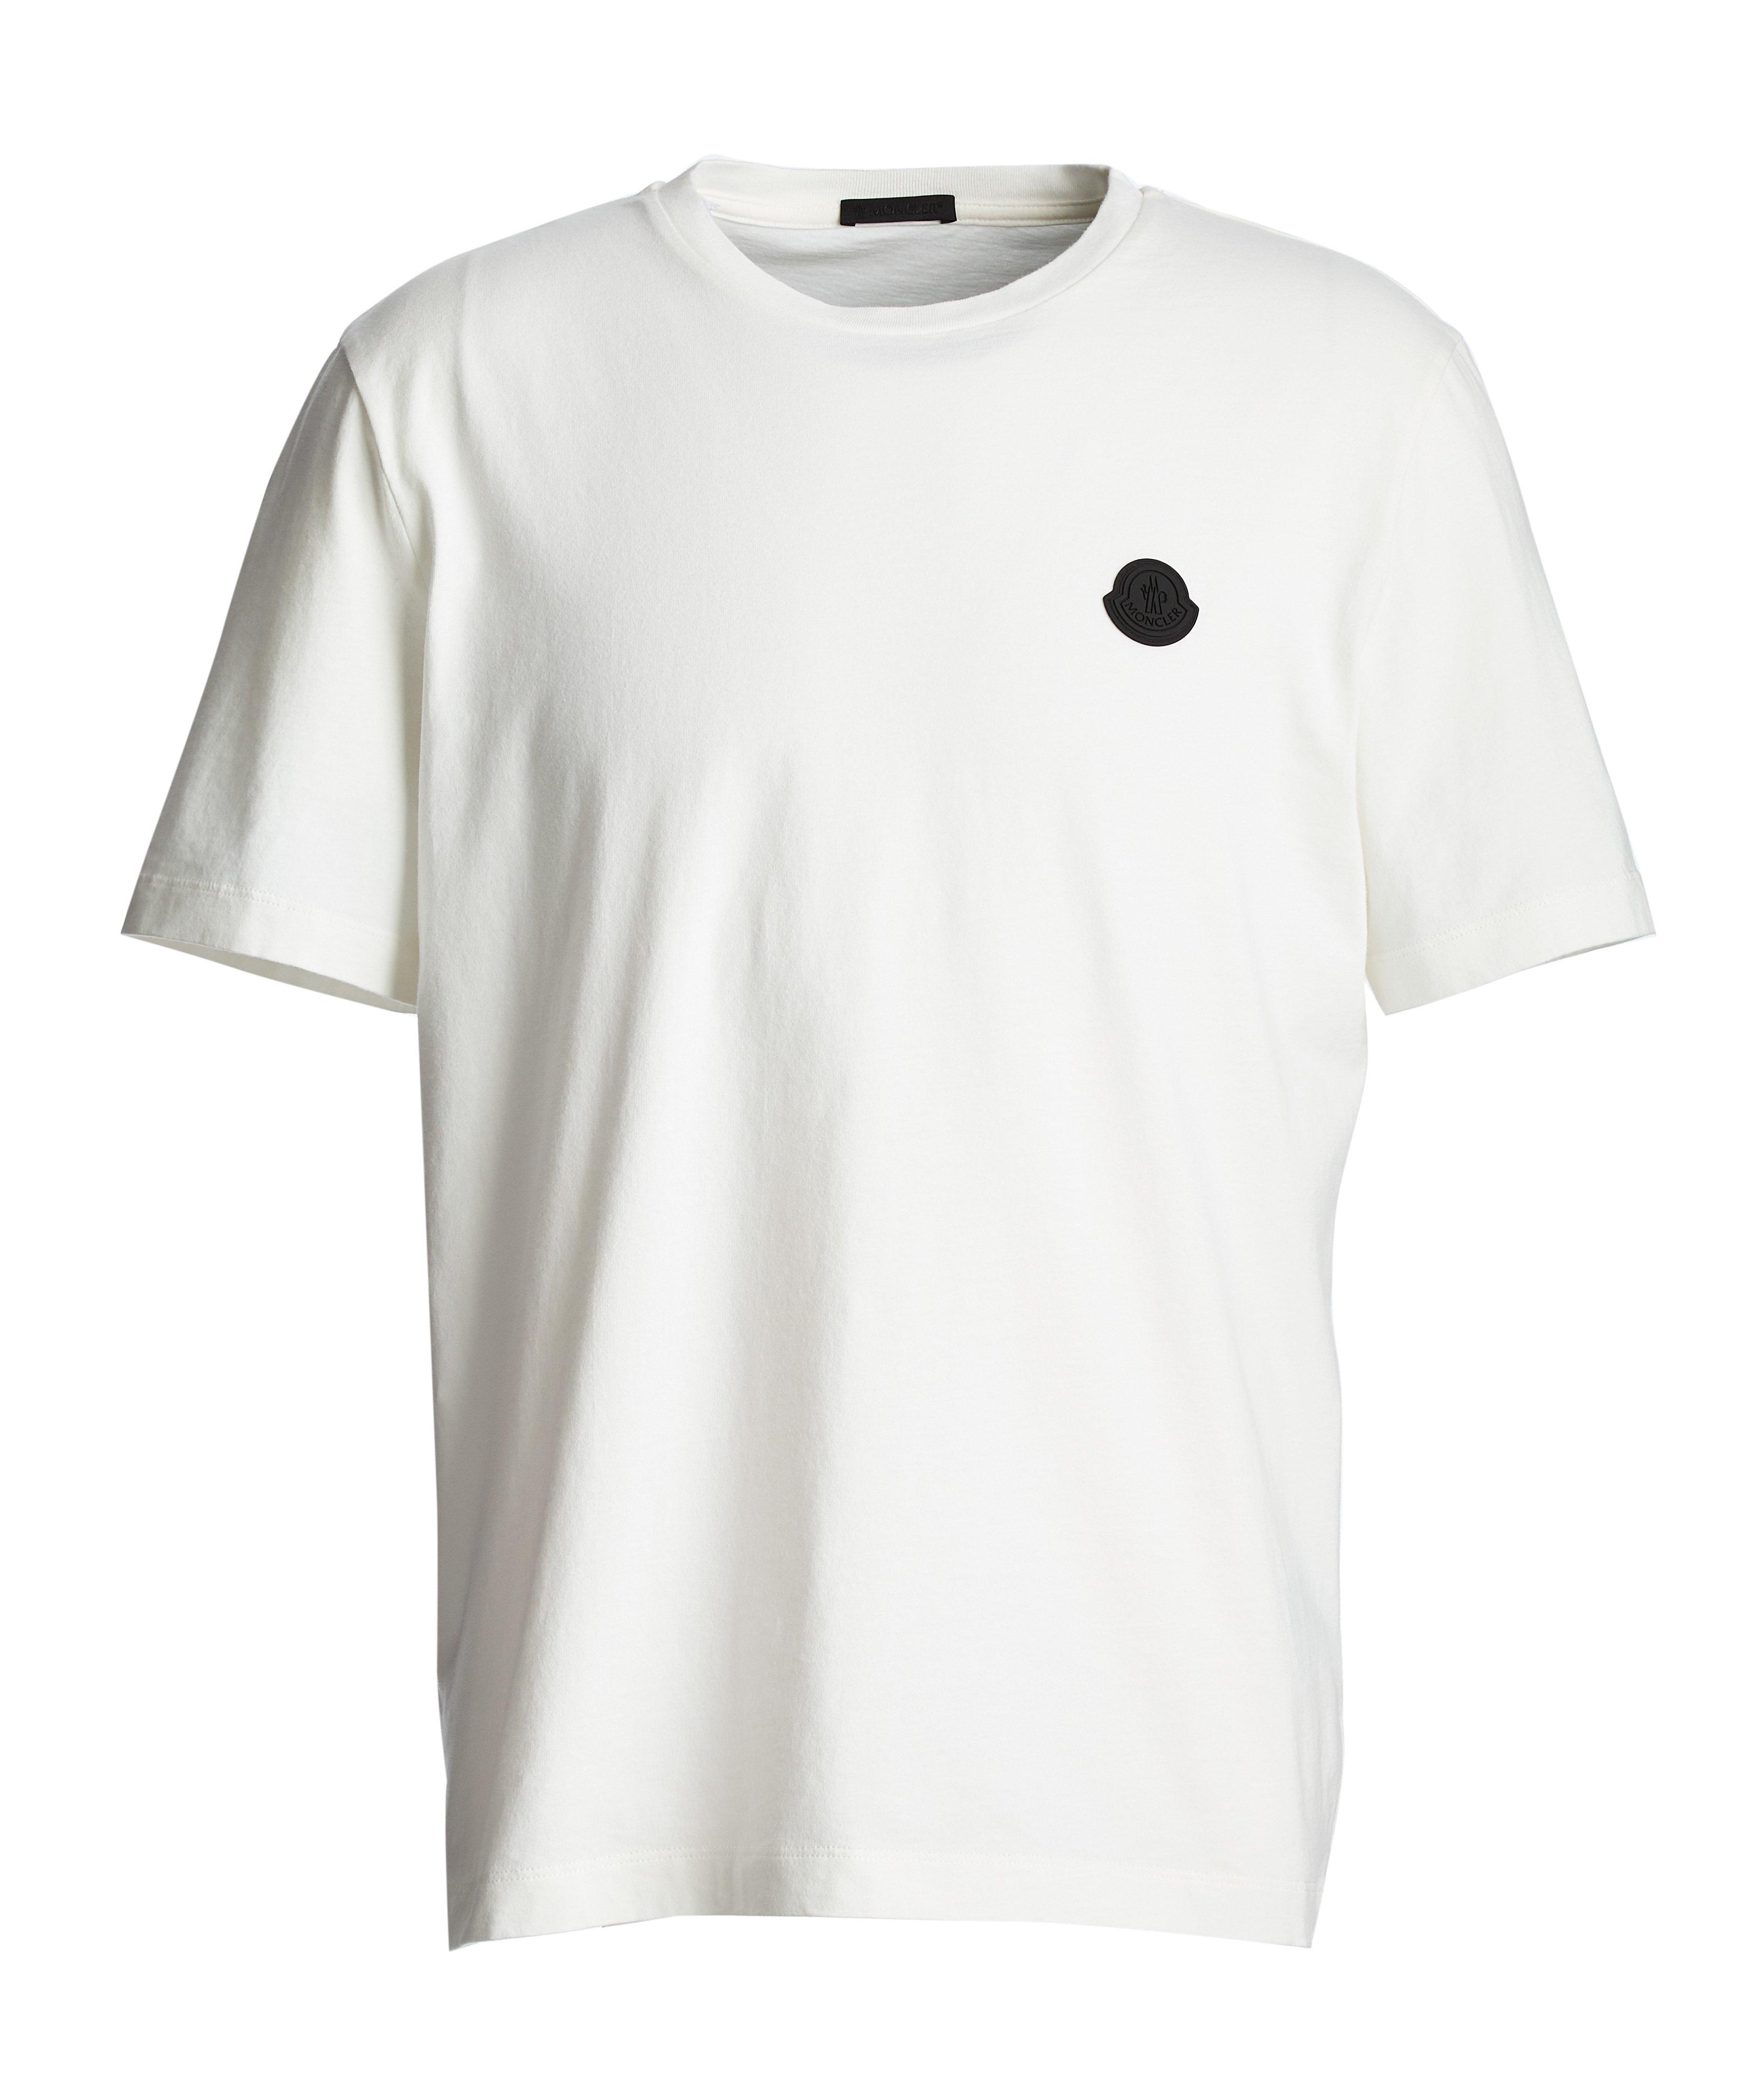 Geometric Cotton T-Shirt image 0